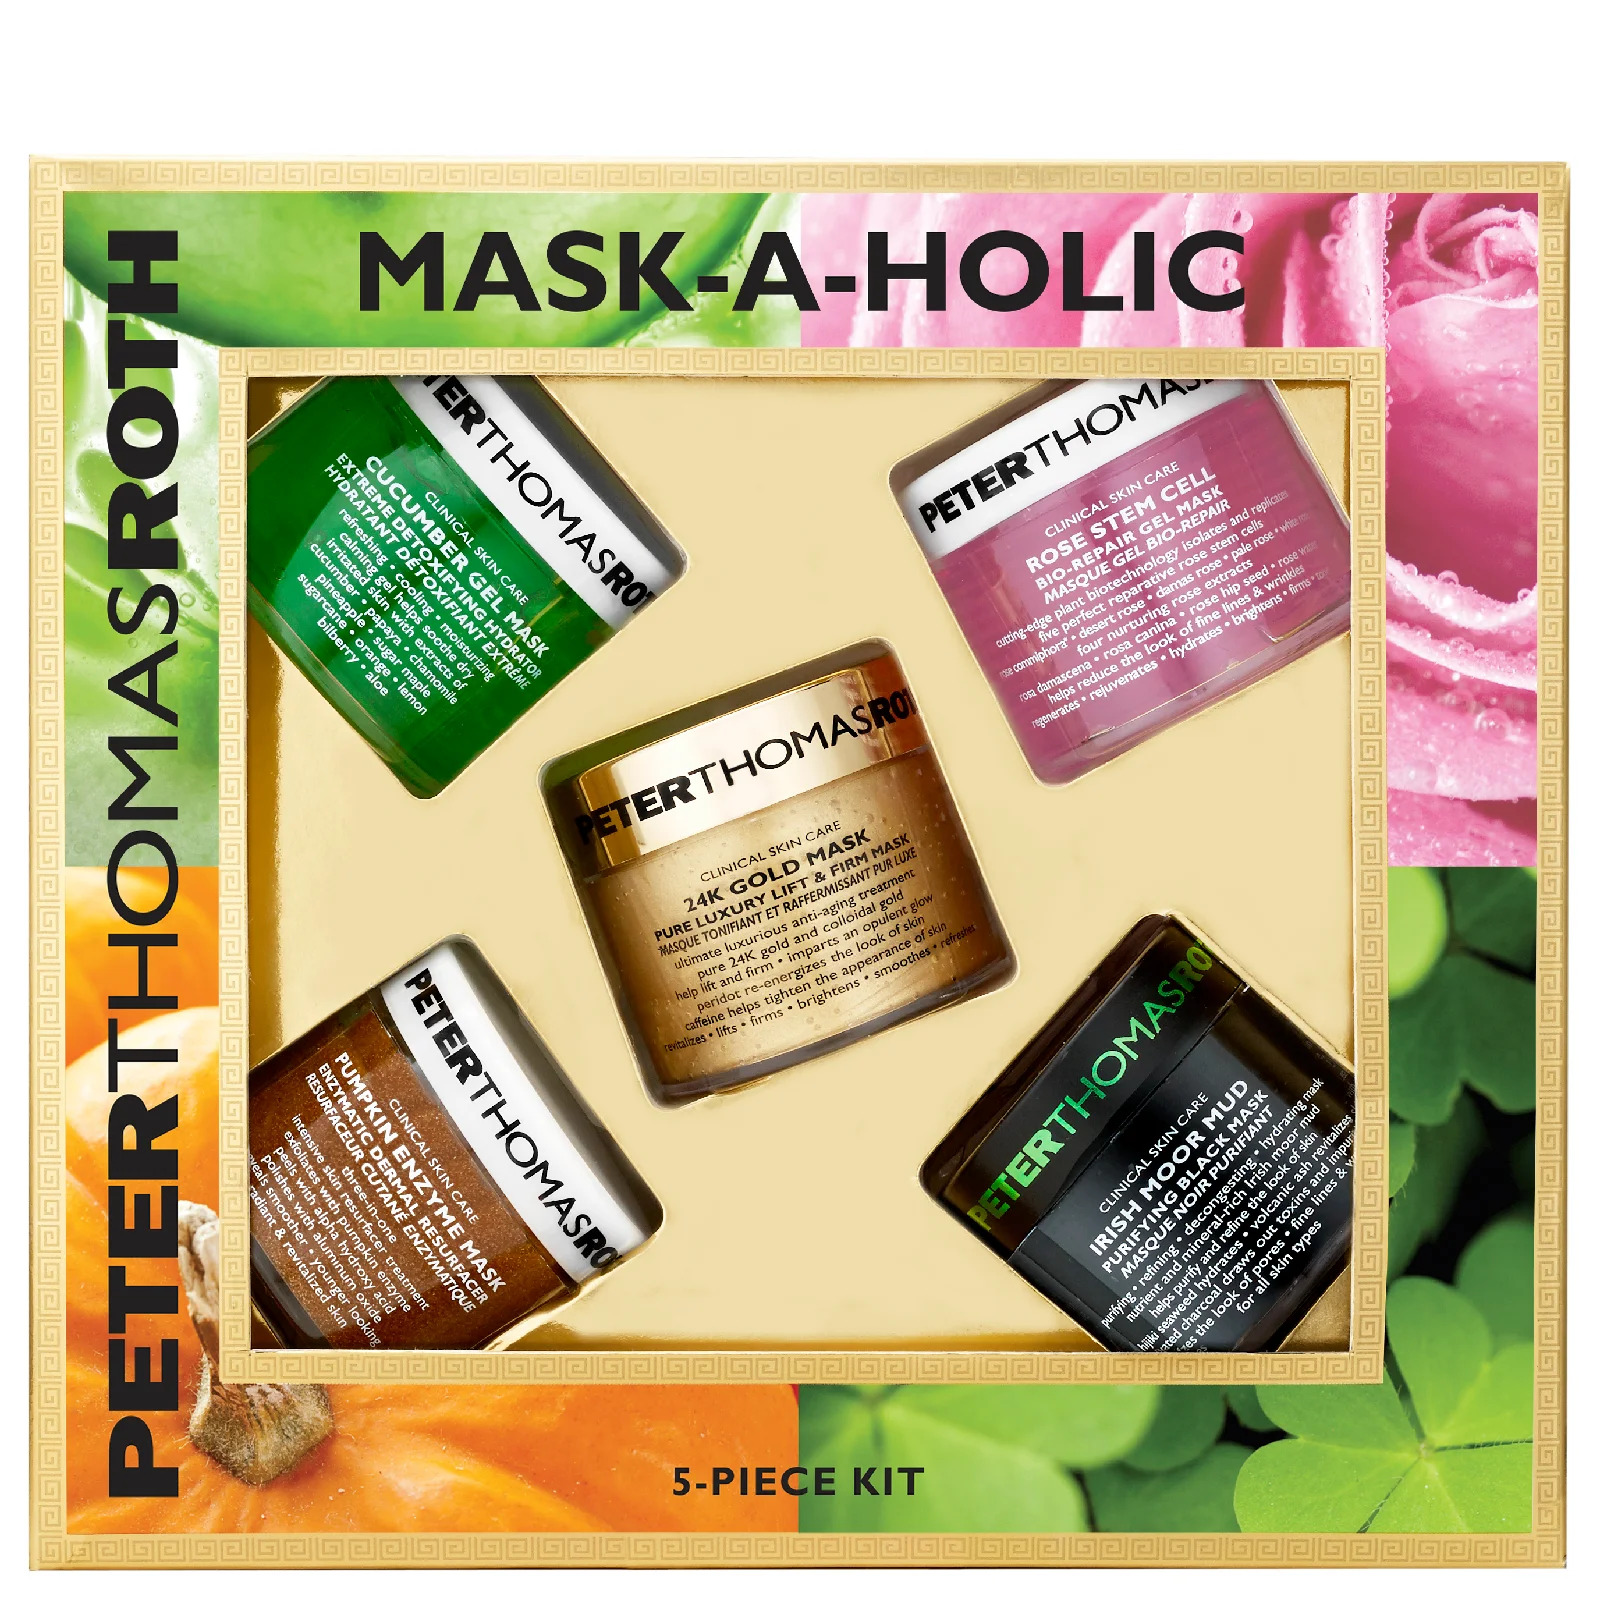 Peter Thomas Roth Mask-A-Holic Kit Image 1